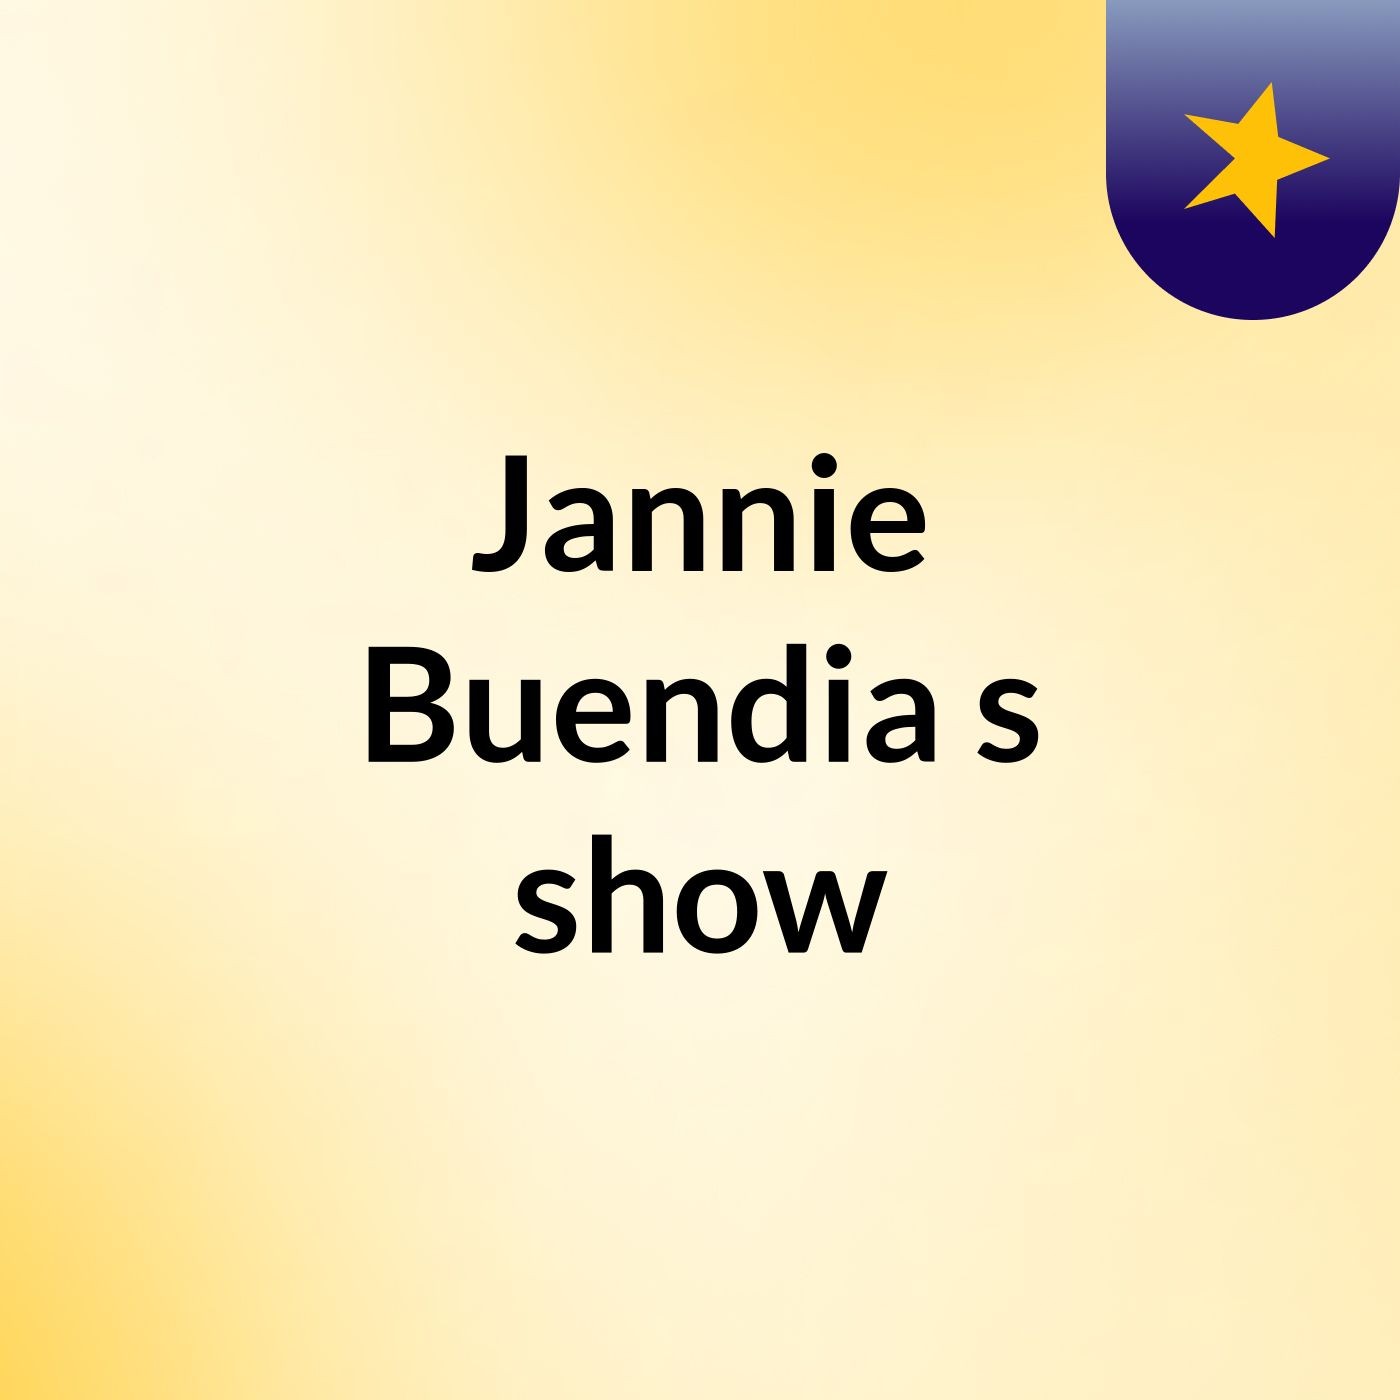 Jannie Buendia's show